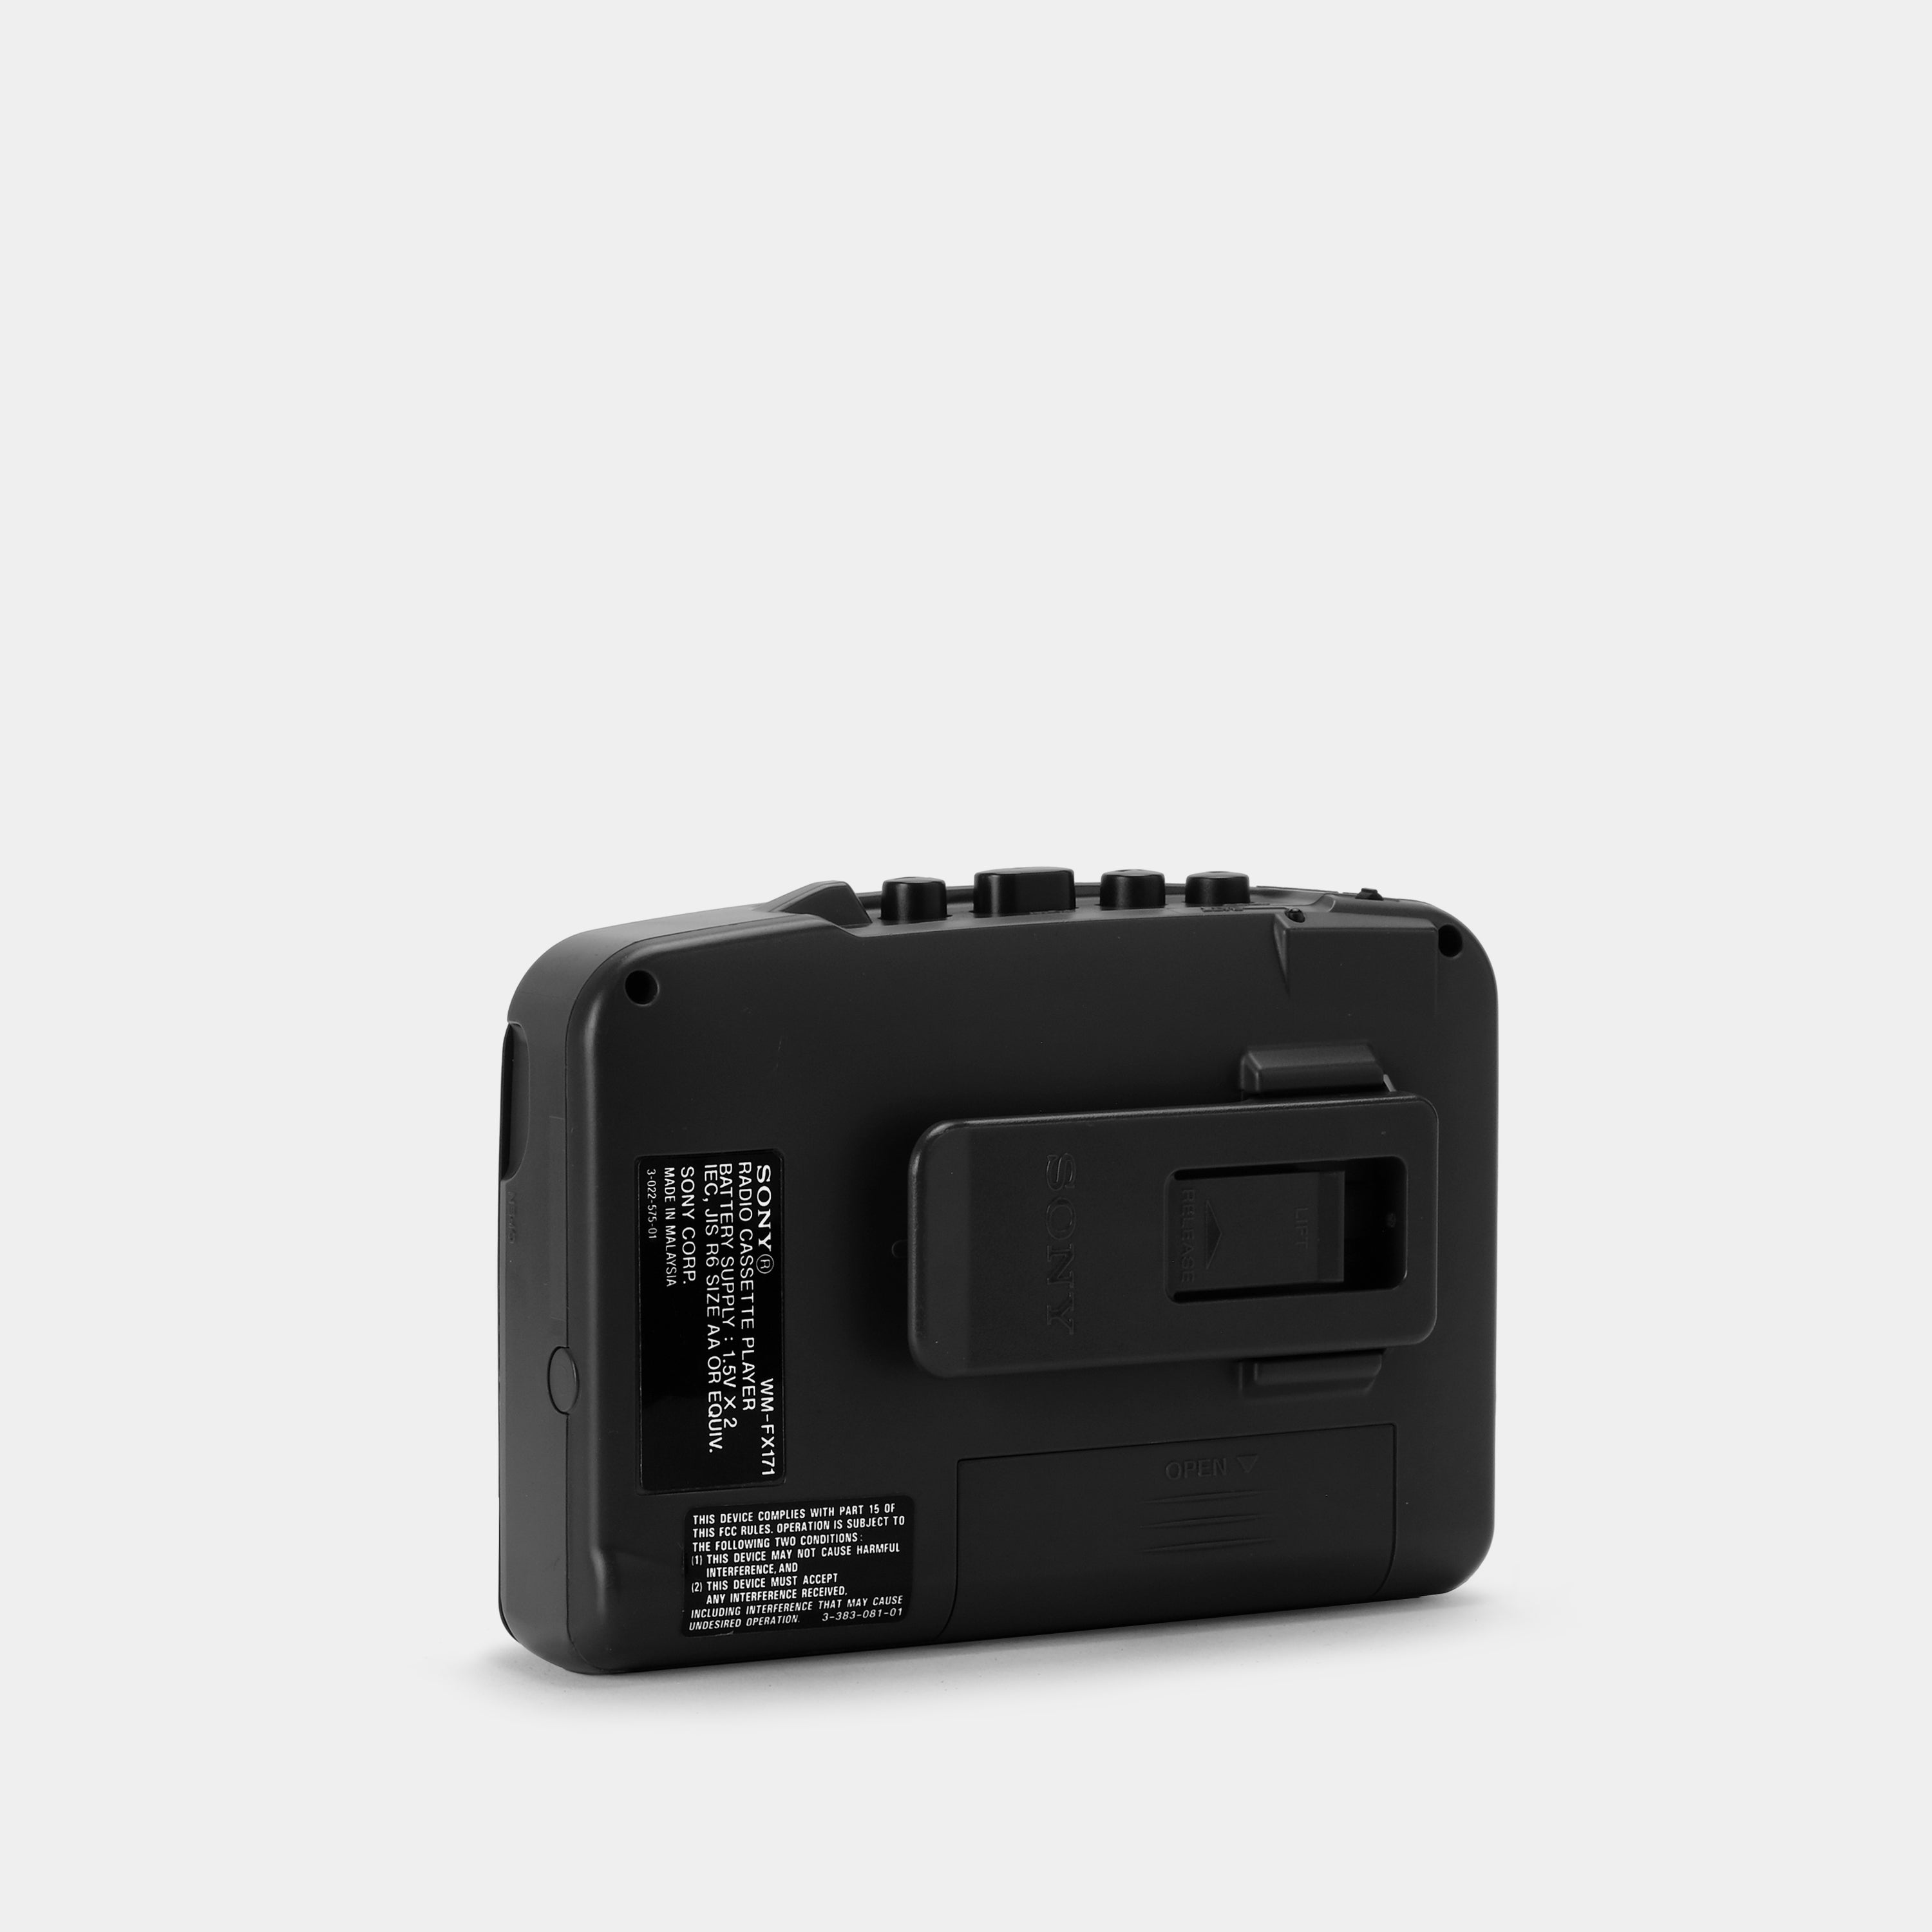 Sony Walkman WM-FX171 AM/FM Magenta Portable Cassette Player